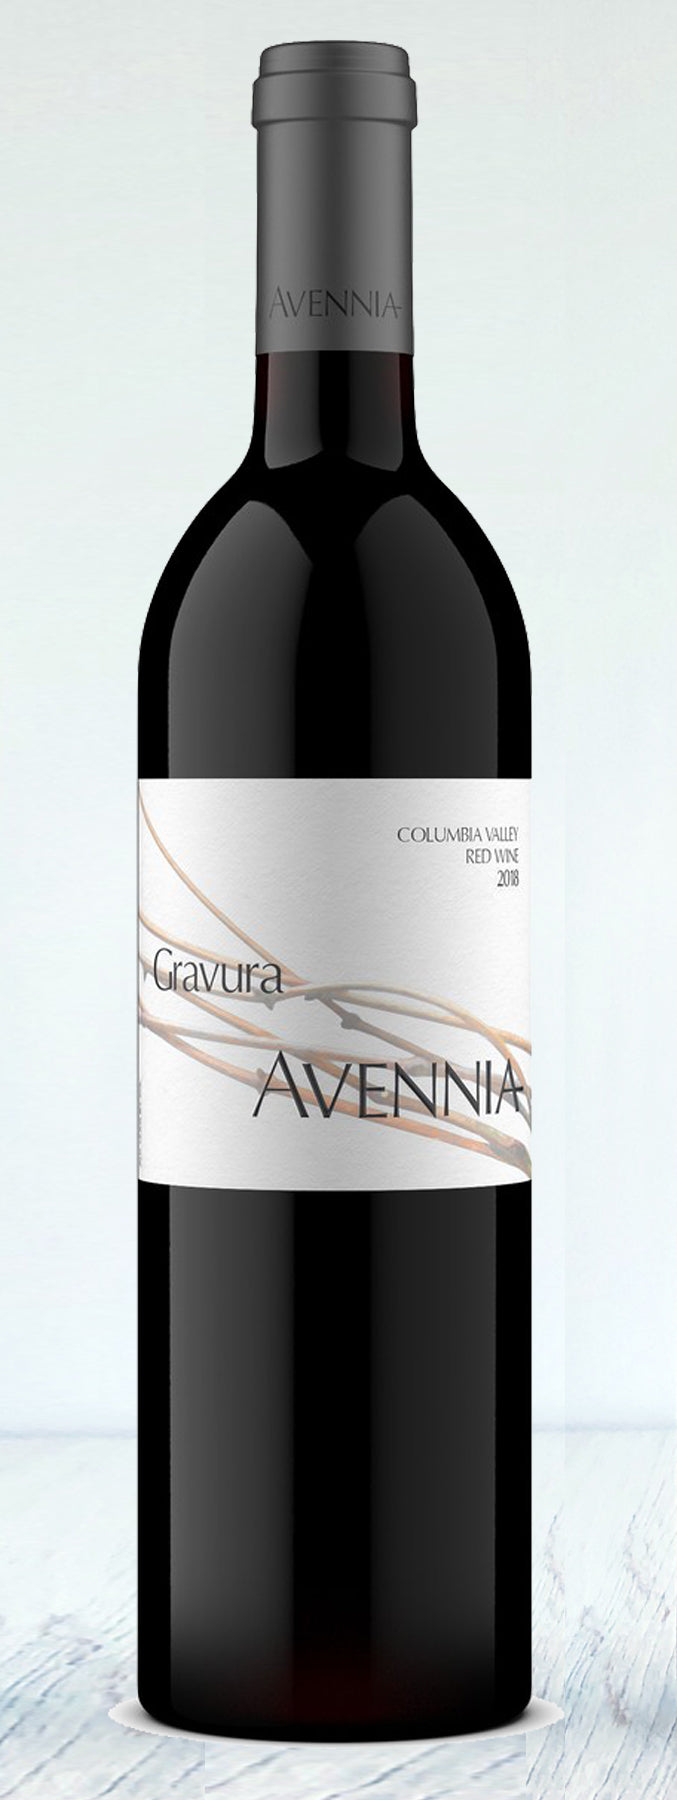 2018 Avennia Gravura Bordeaux Blend